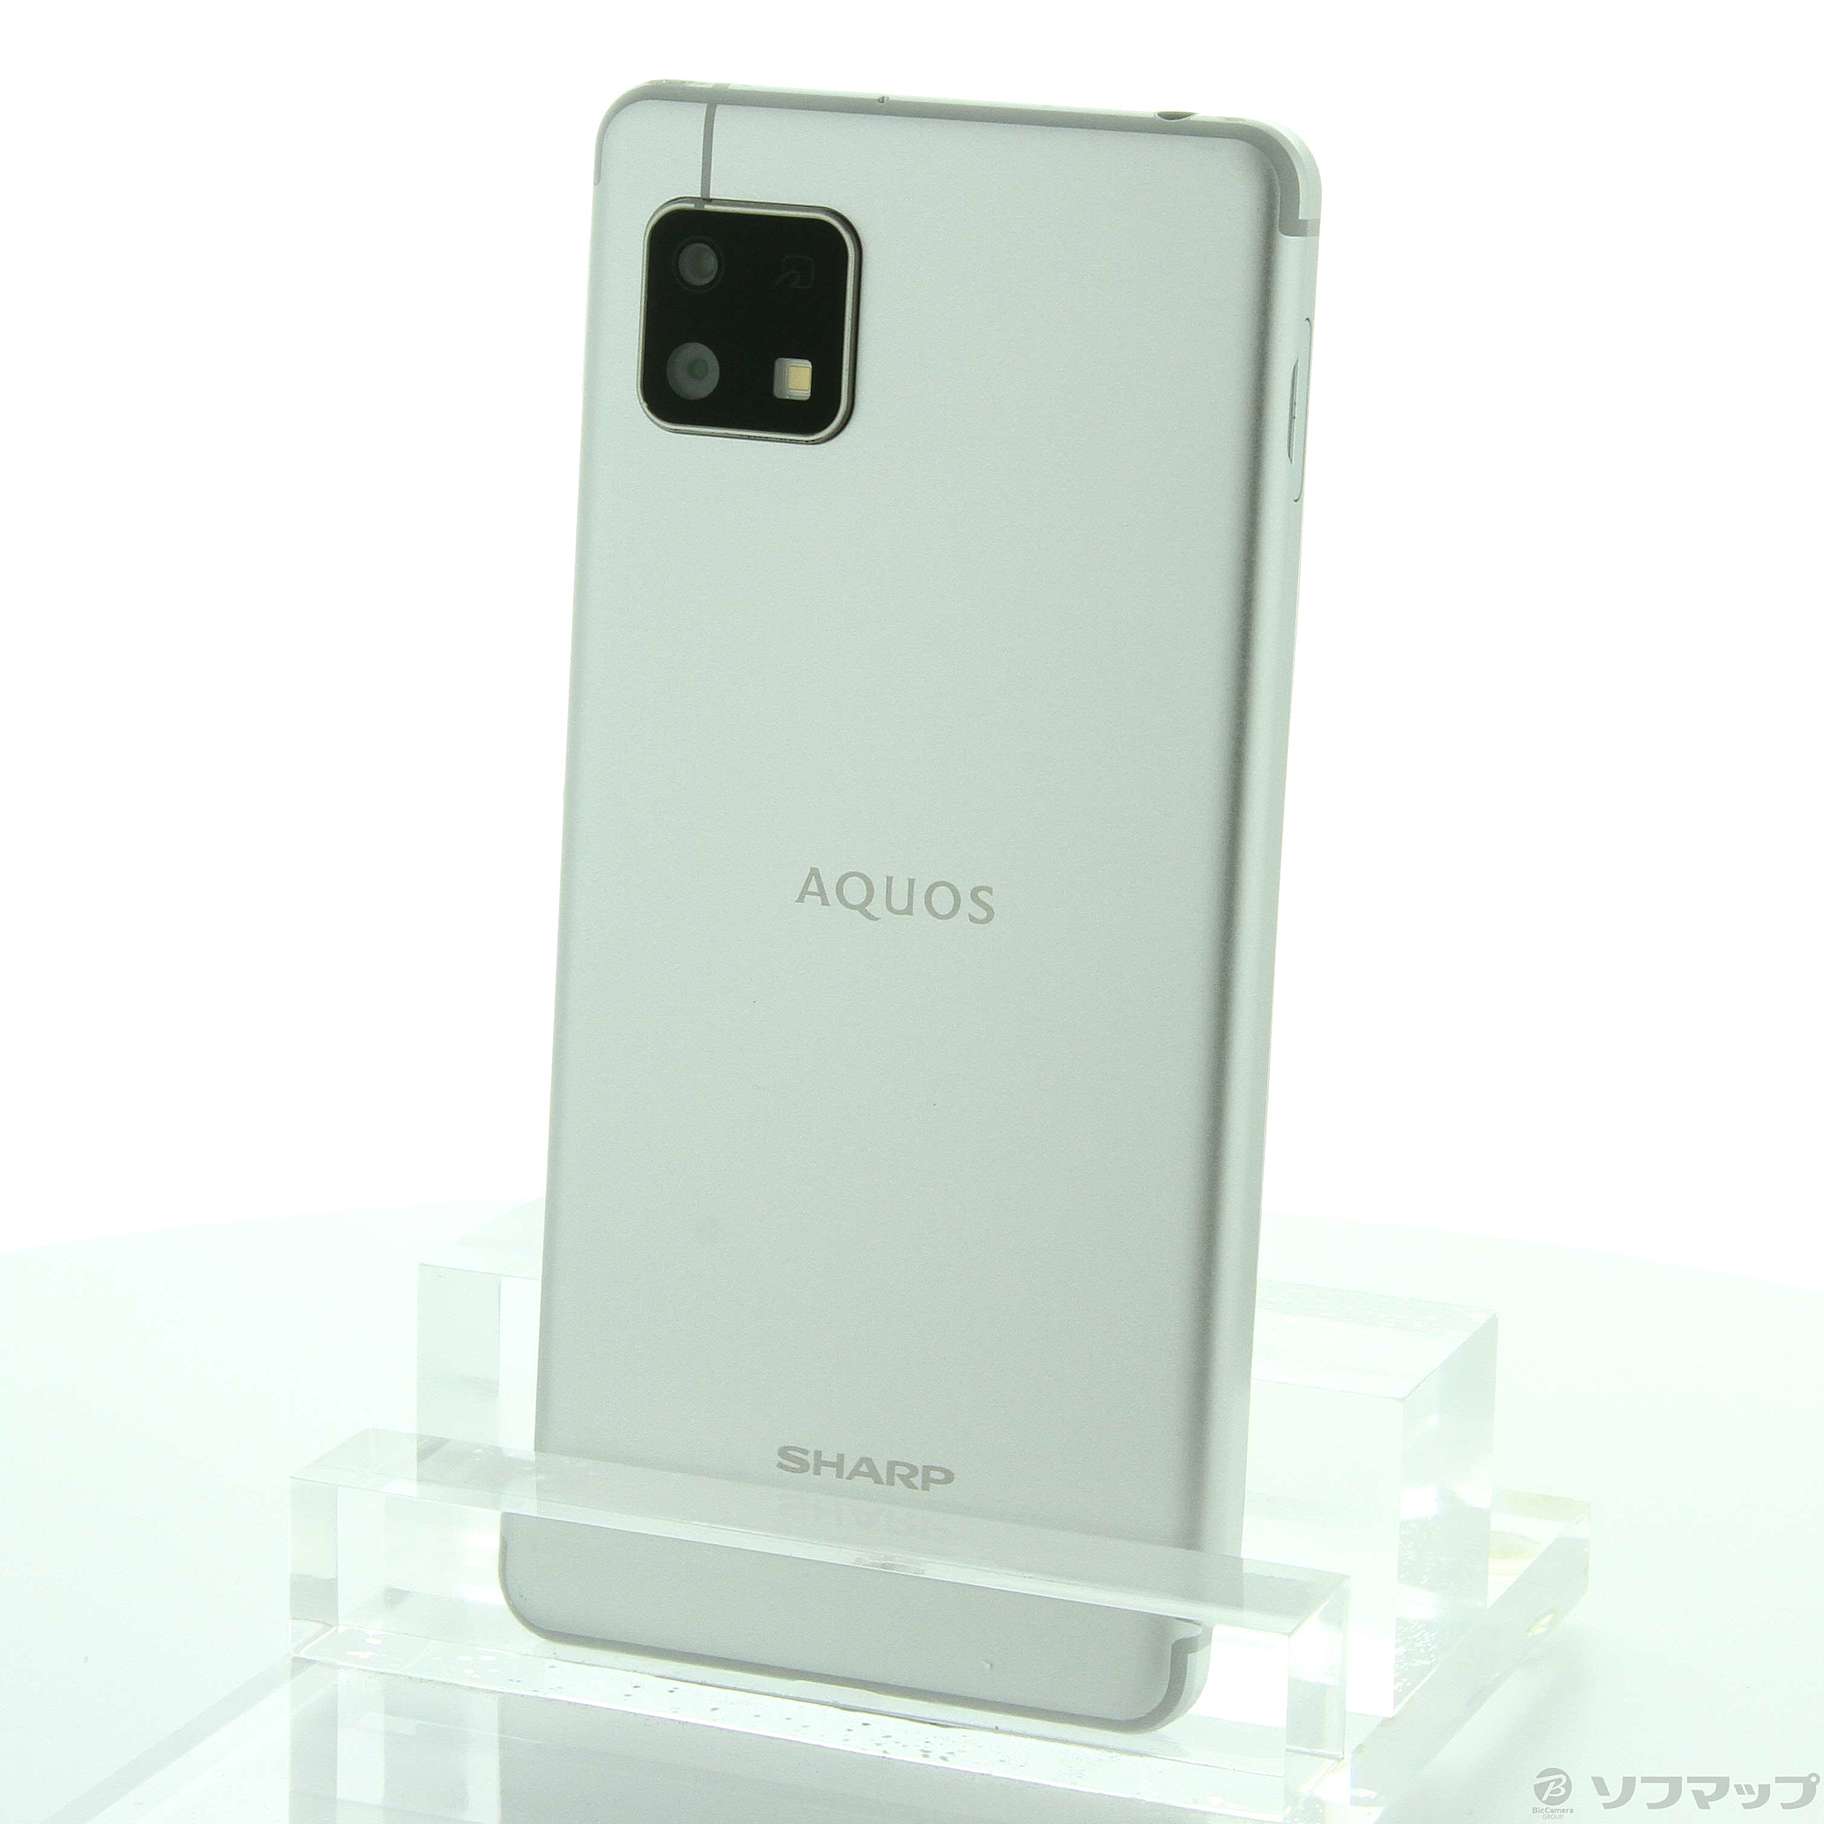 AQUOS sense4 lite シルバー 64 GB SIMフリー - スマートフォン本体